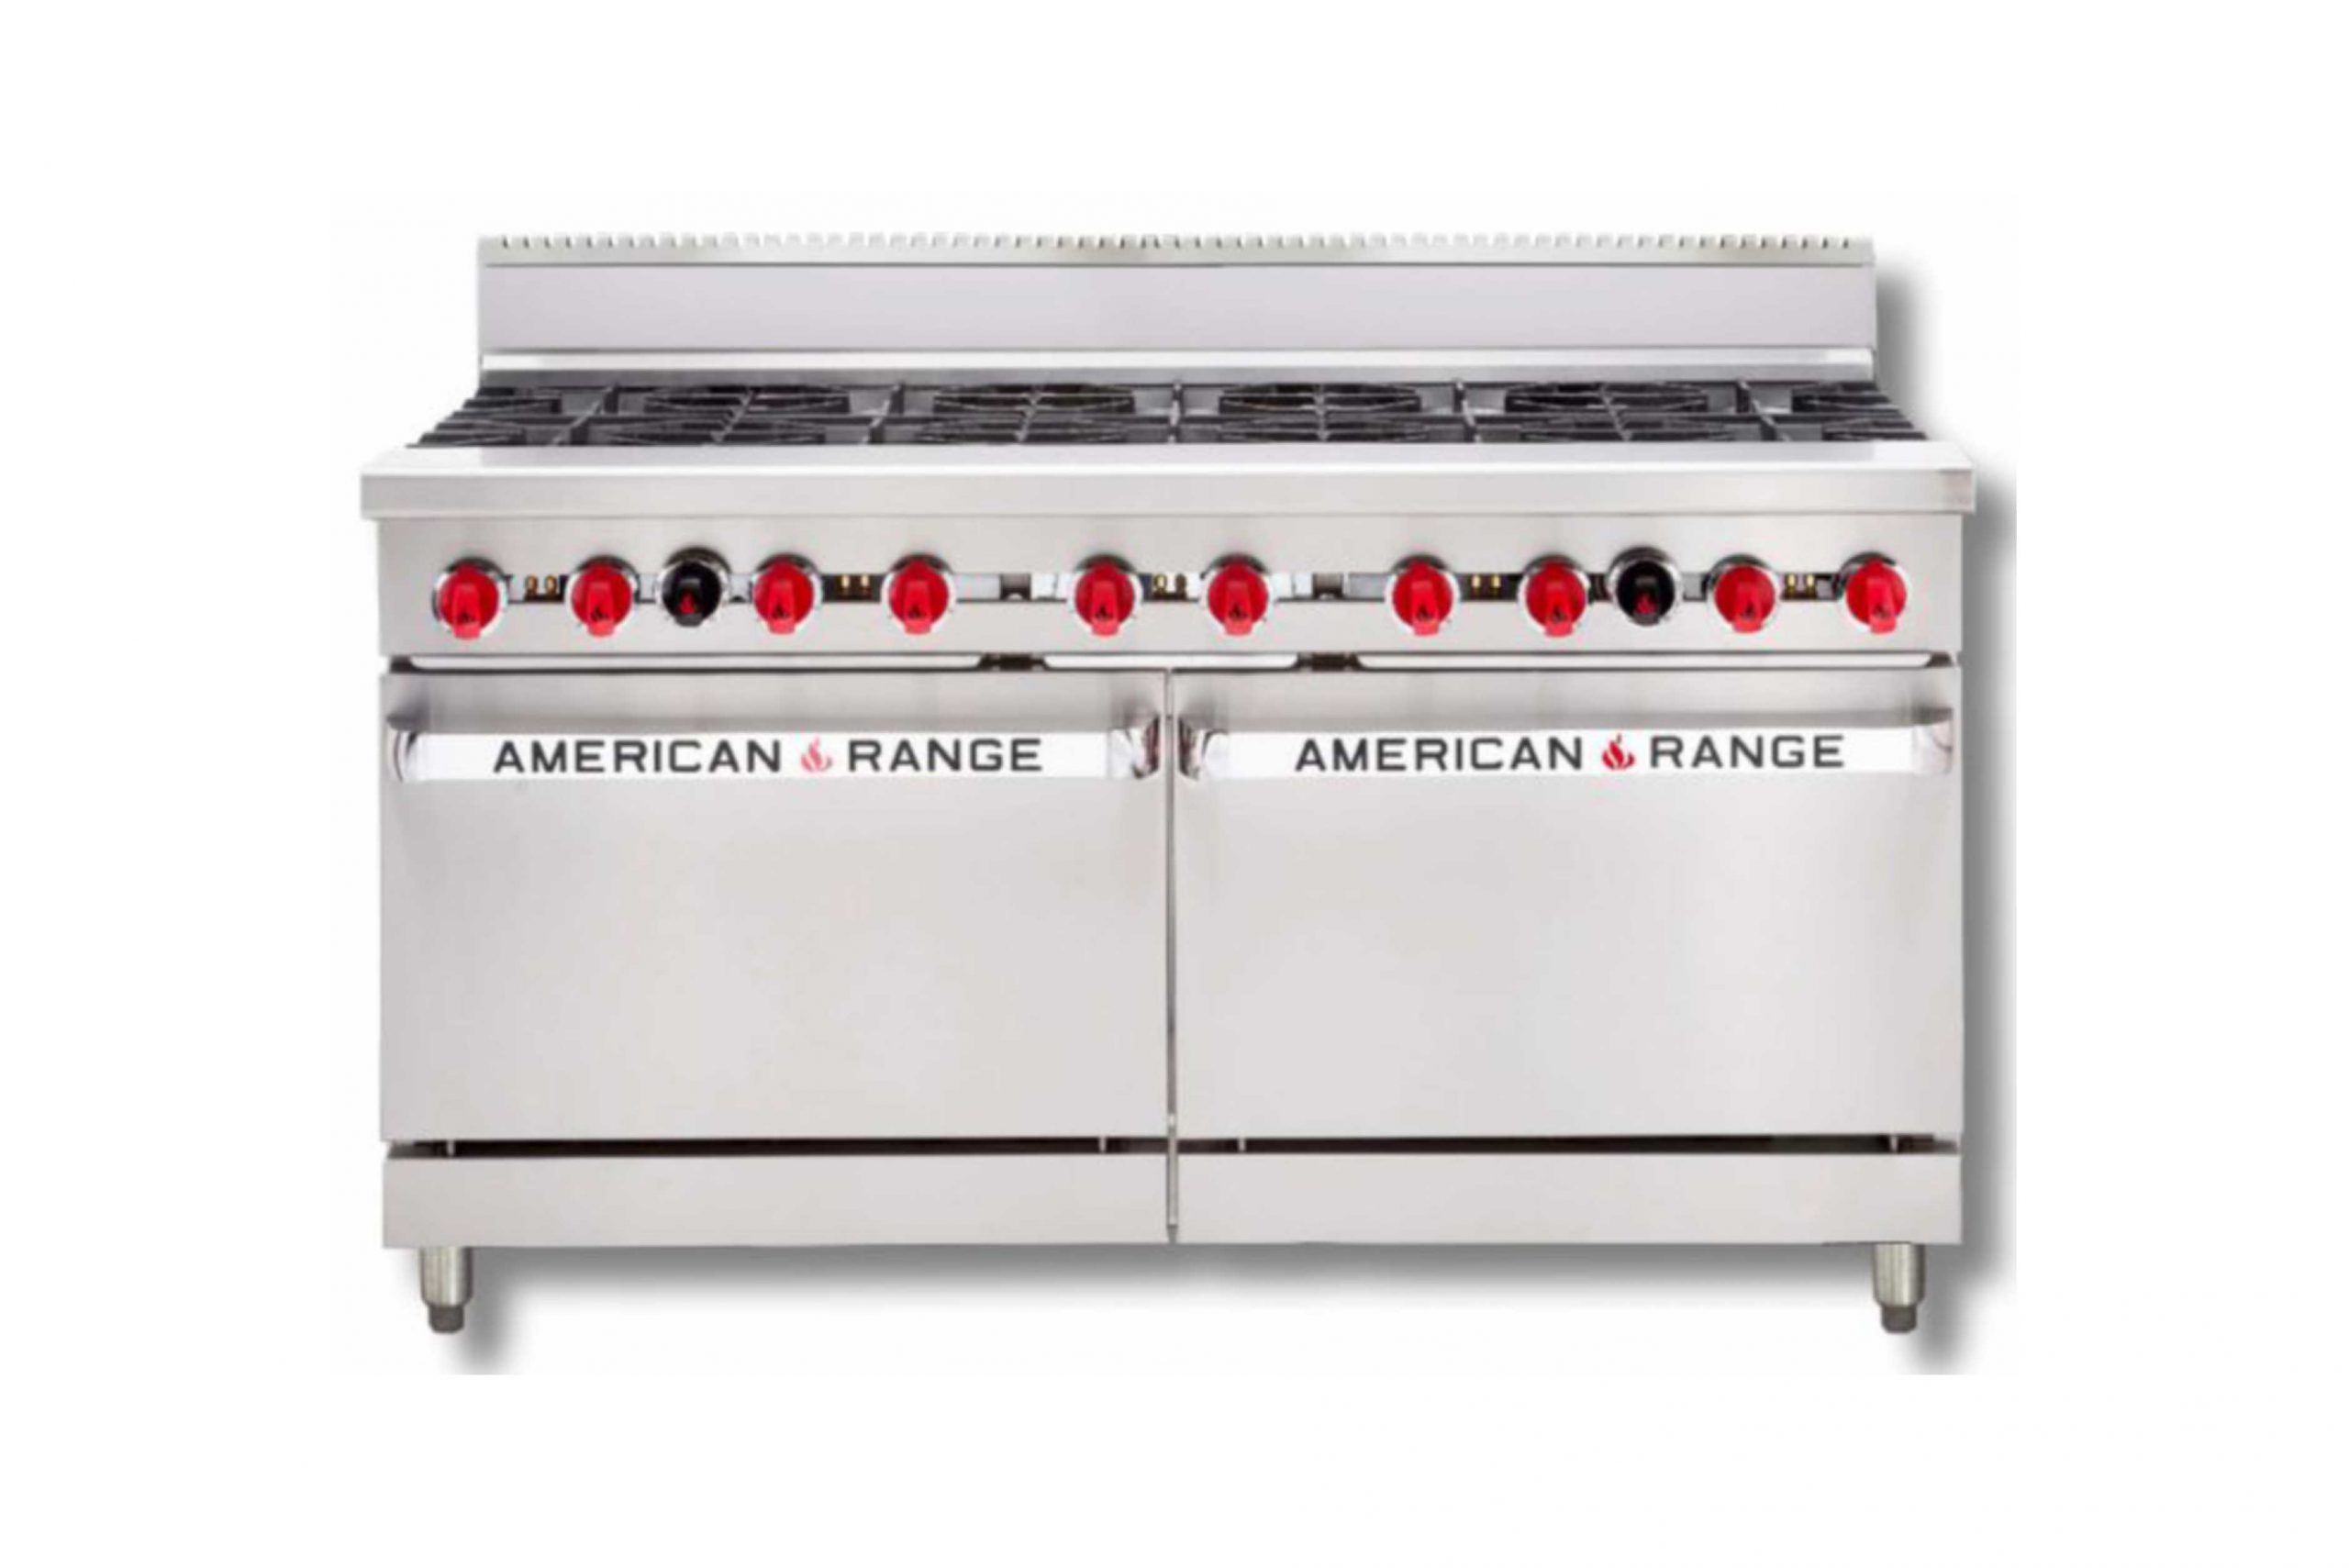 American range oven